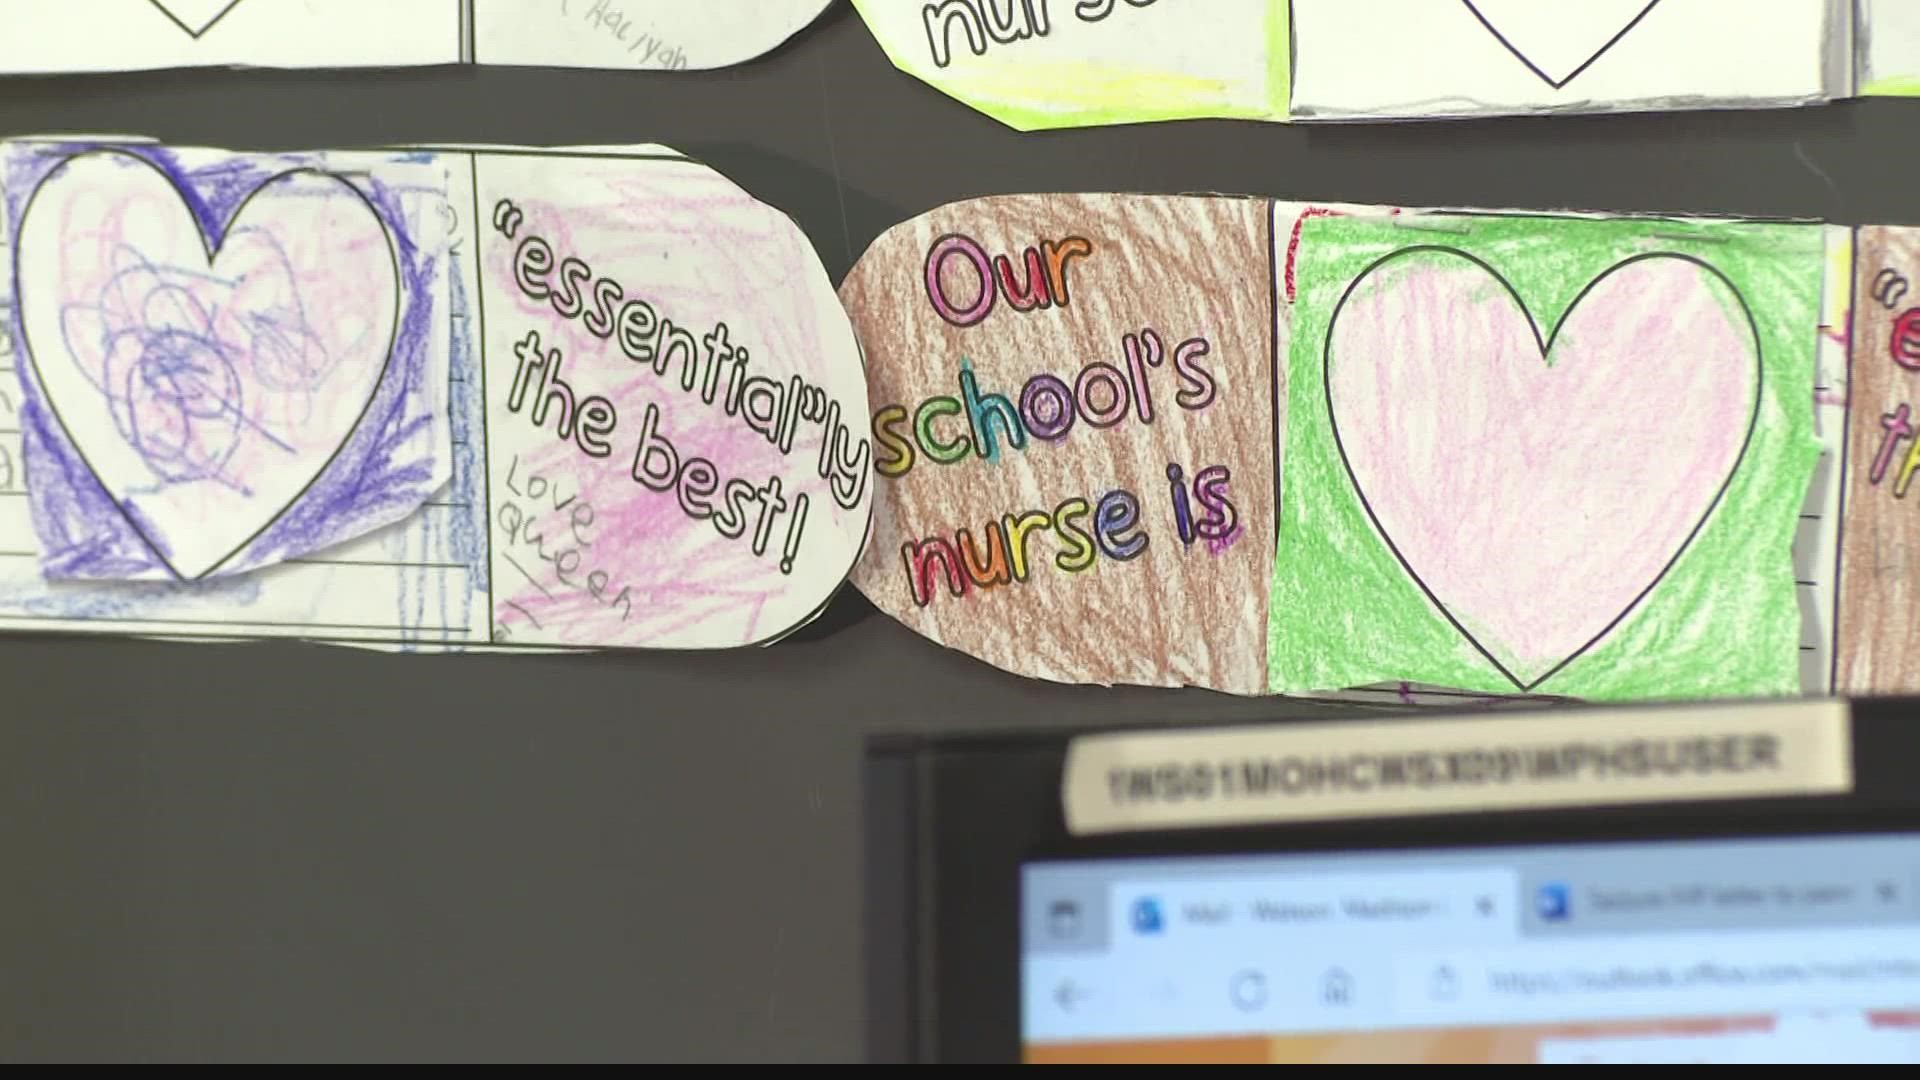 The kids at Greenbriar Elementary School call her "Nurse Maddie."